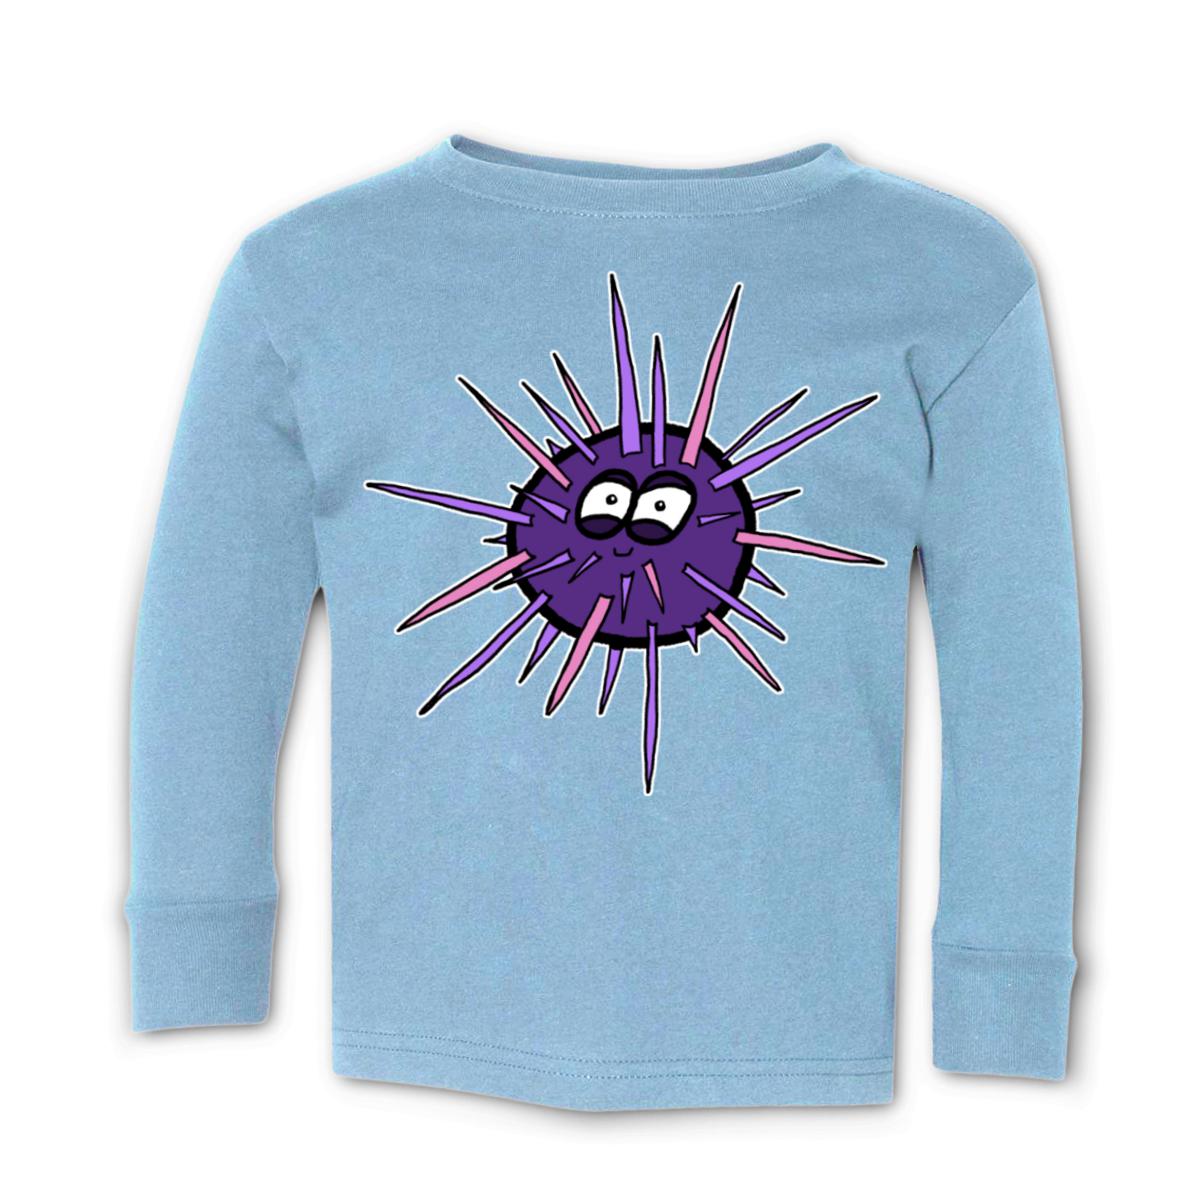 Sea Urchin Kid's Long Sleeve Tee Large light-blue